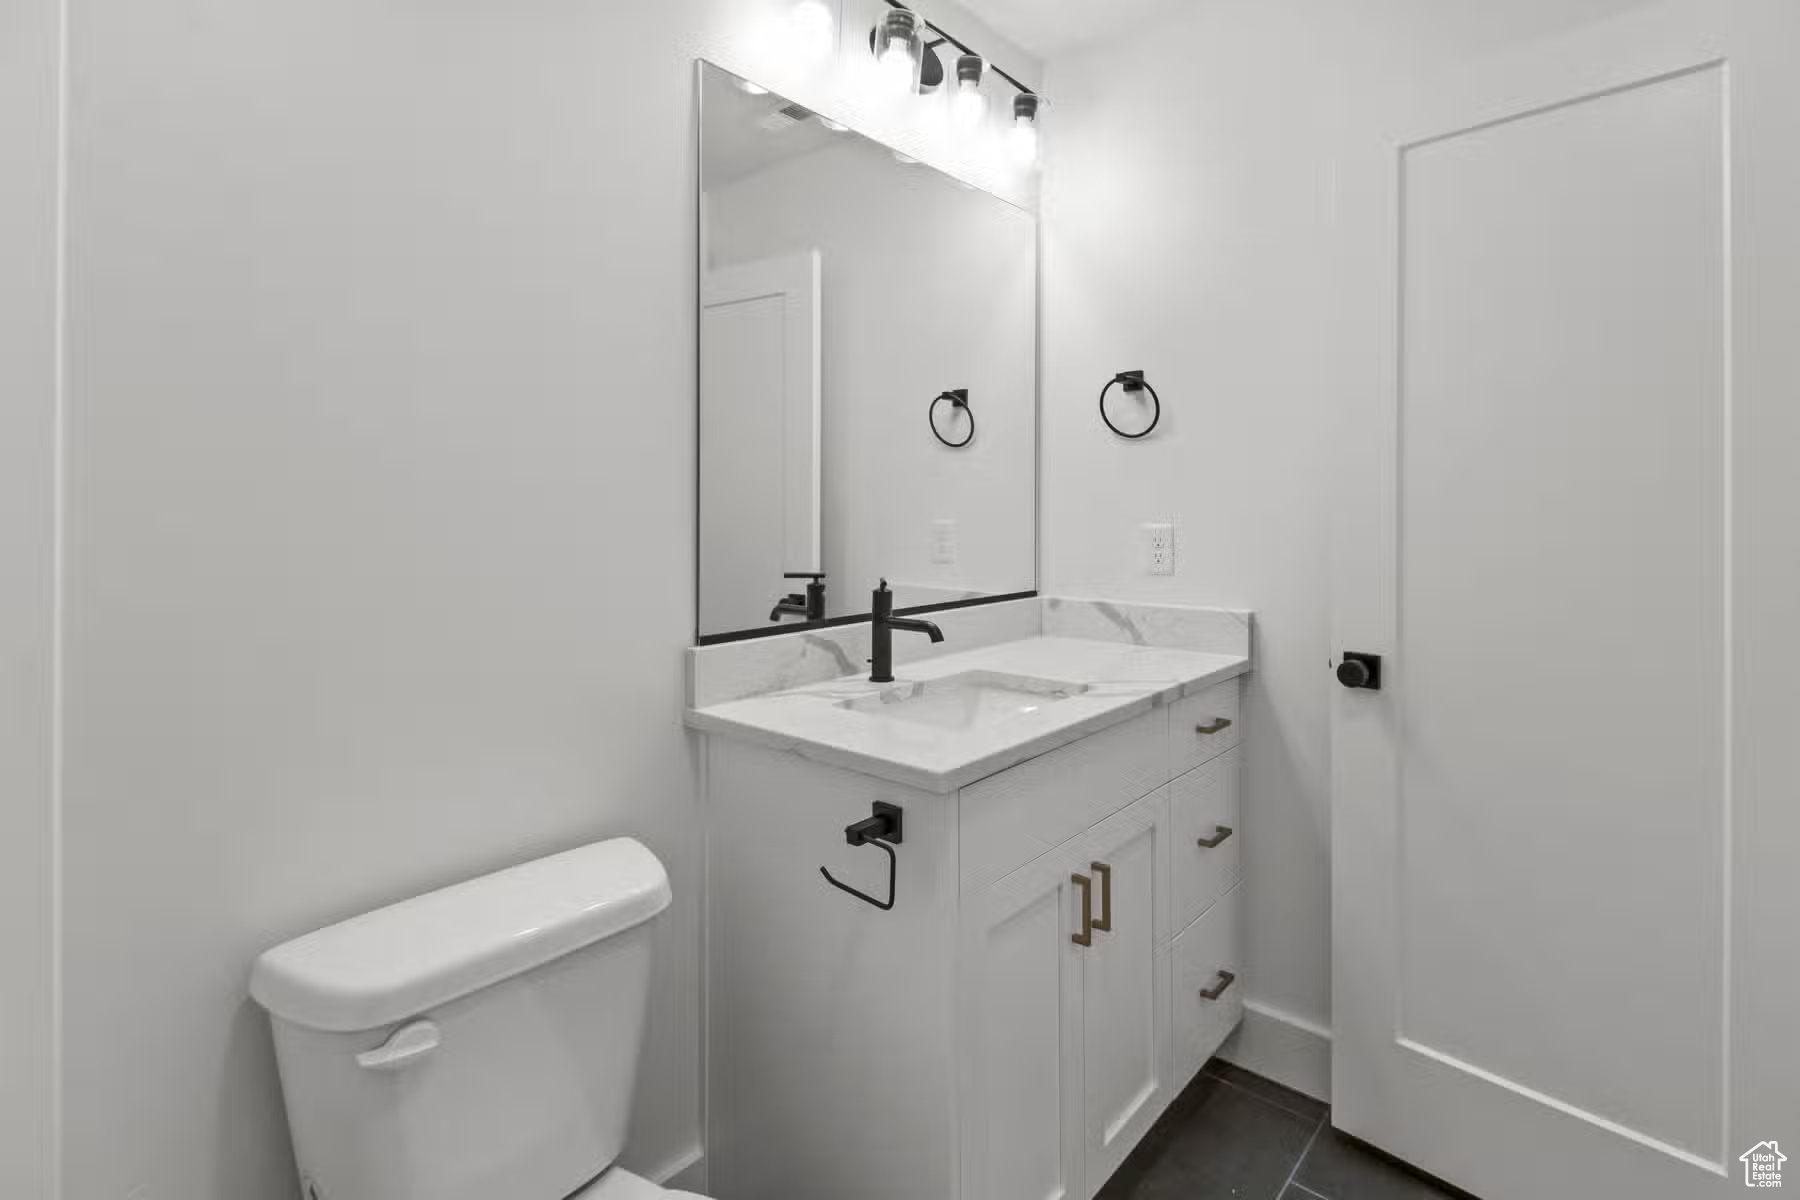 Bathroom with tile floors, toilet, and large vanity